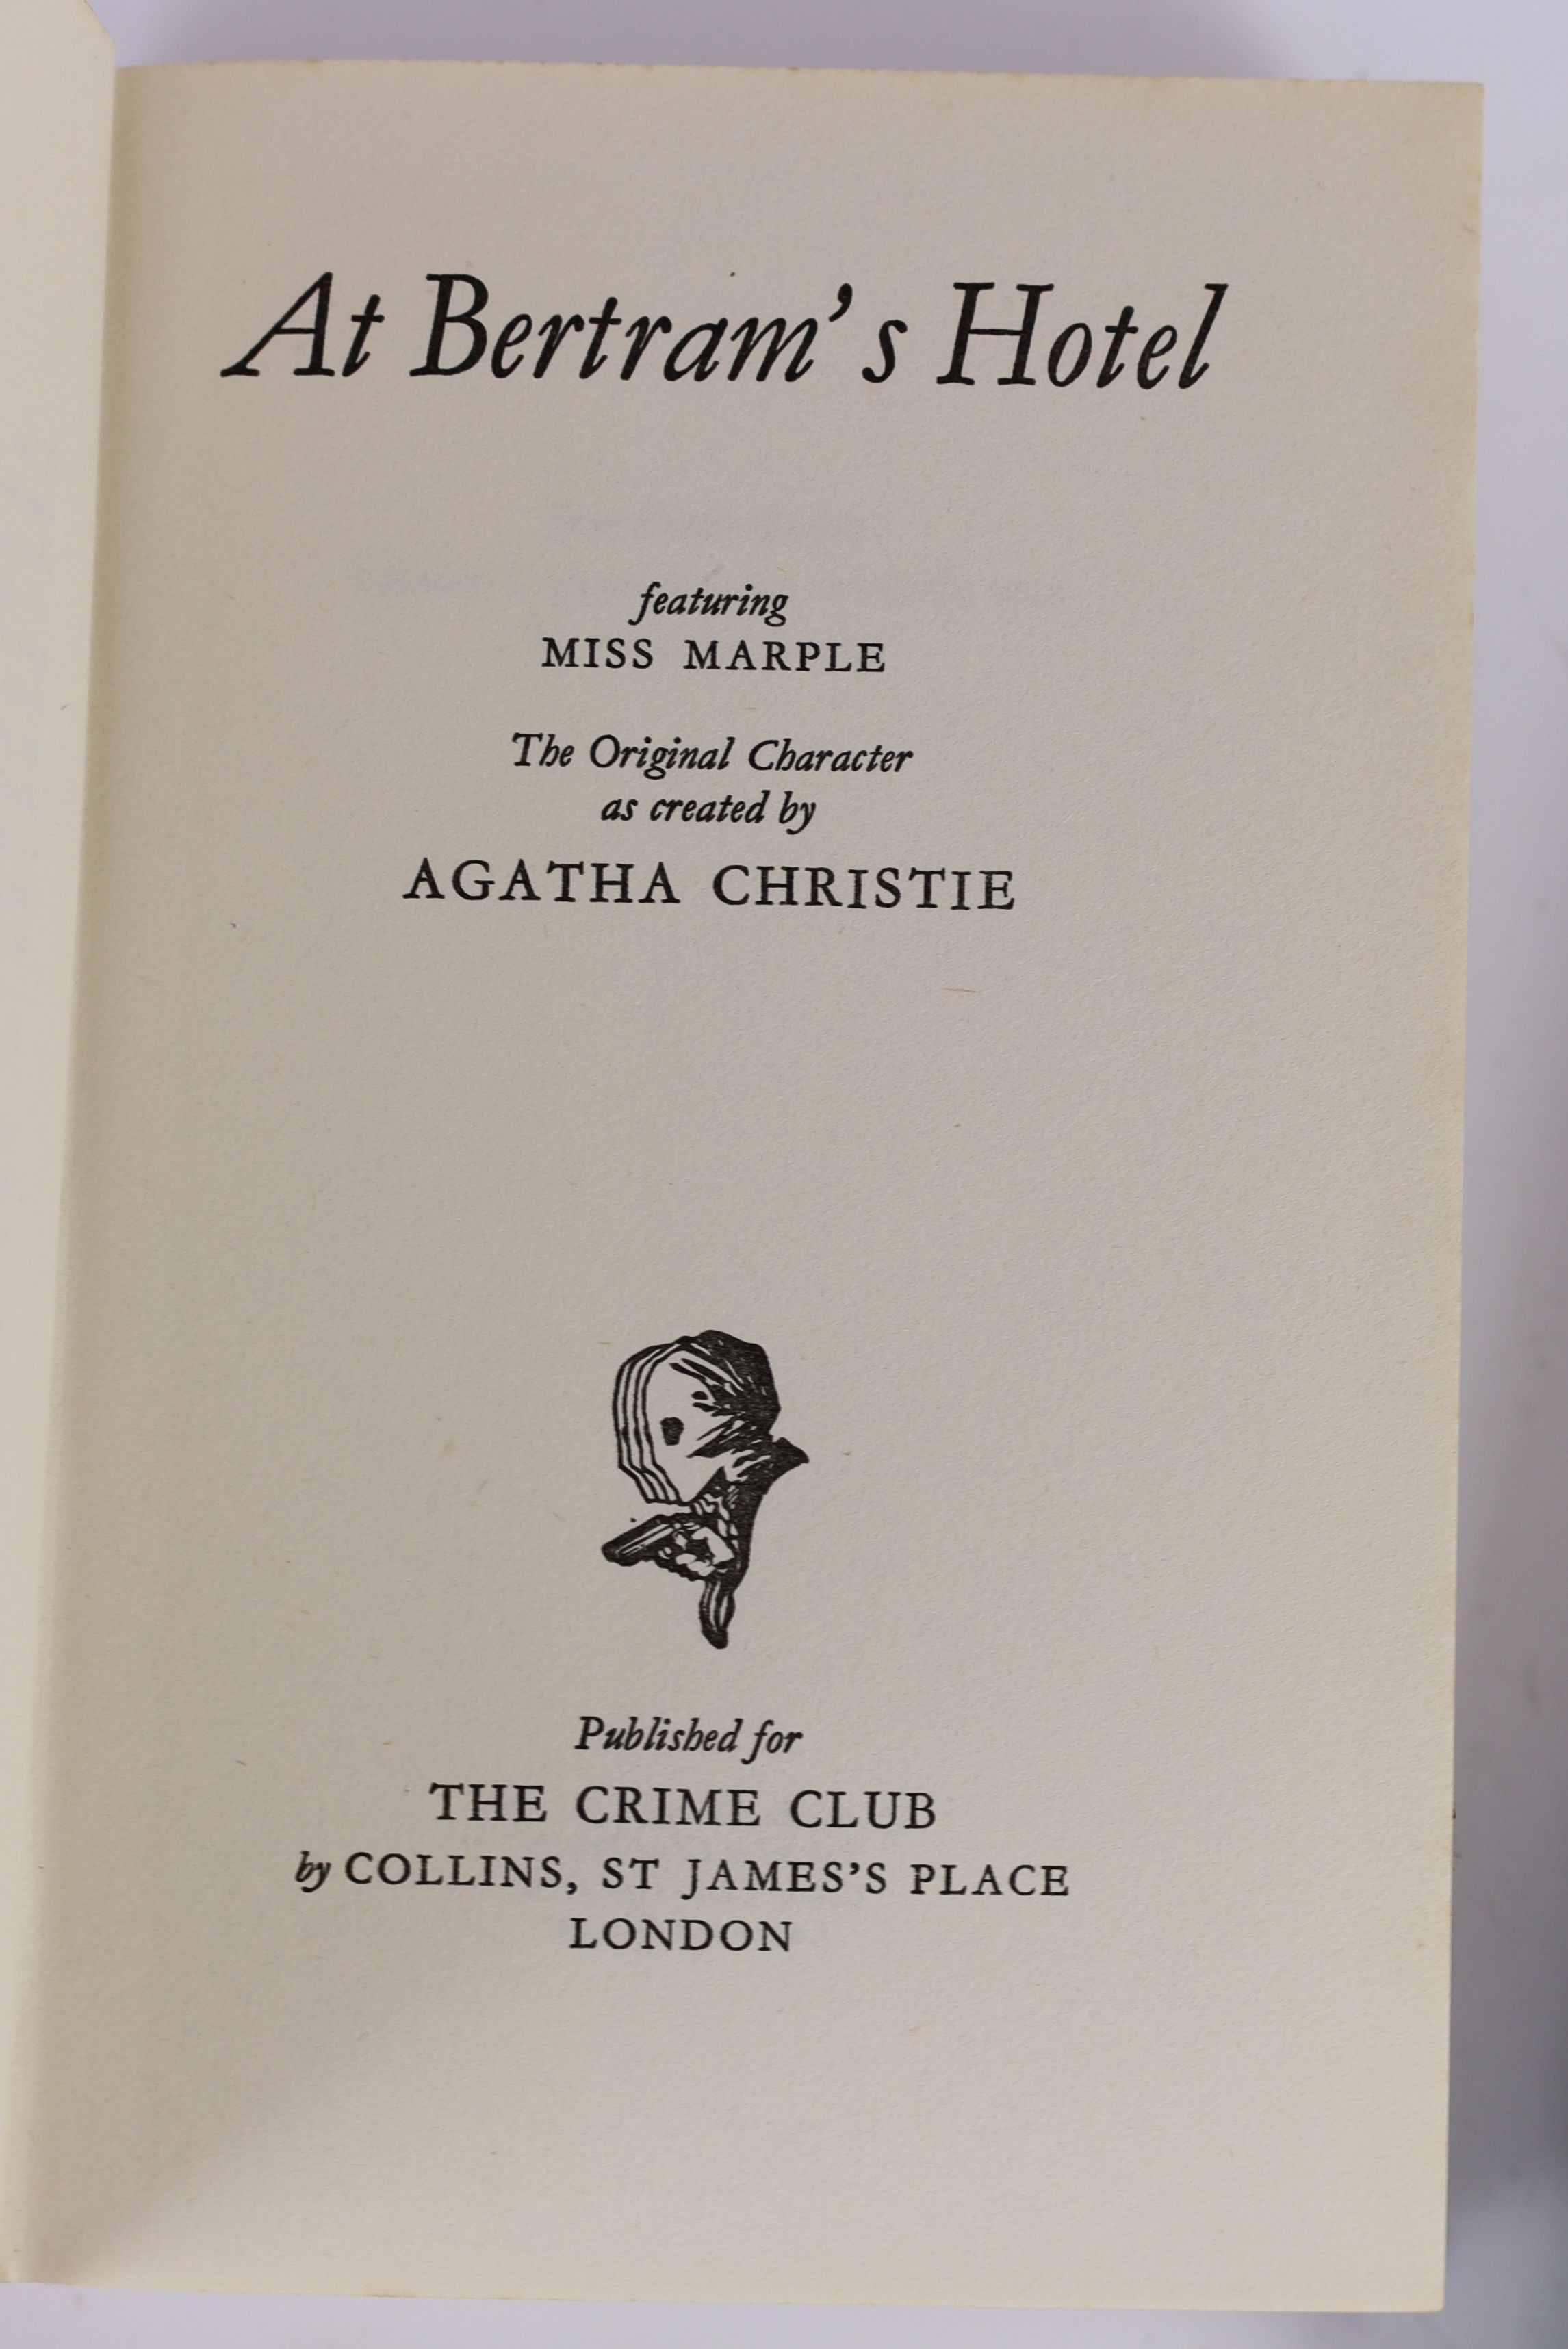 Christie, Agatha - Three works - At Bertram’s Hotel